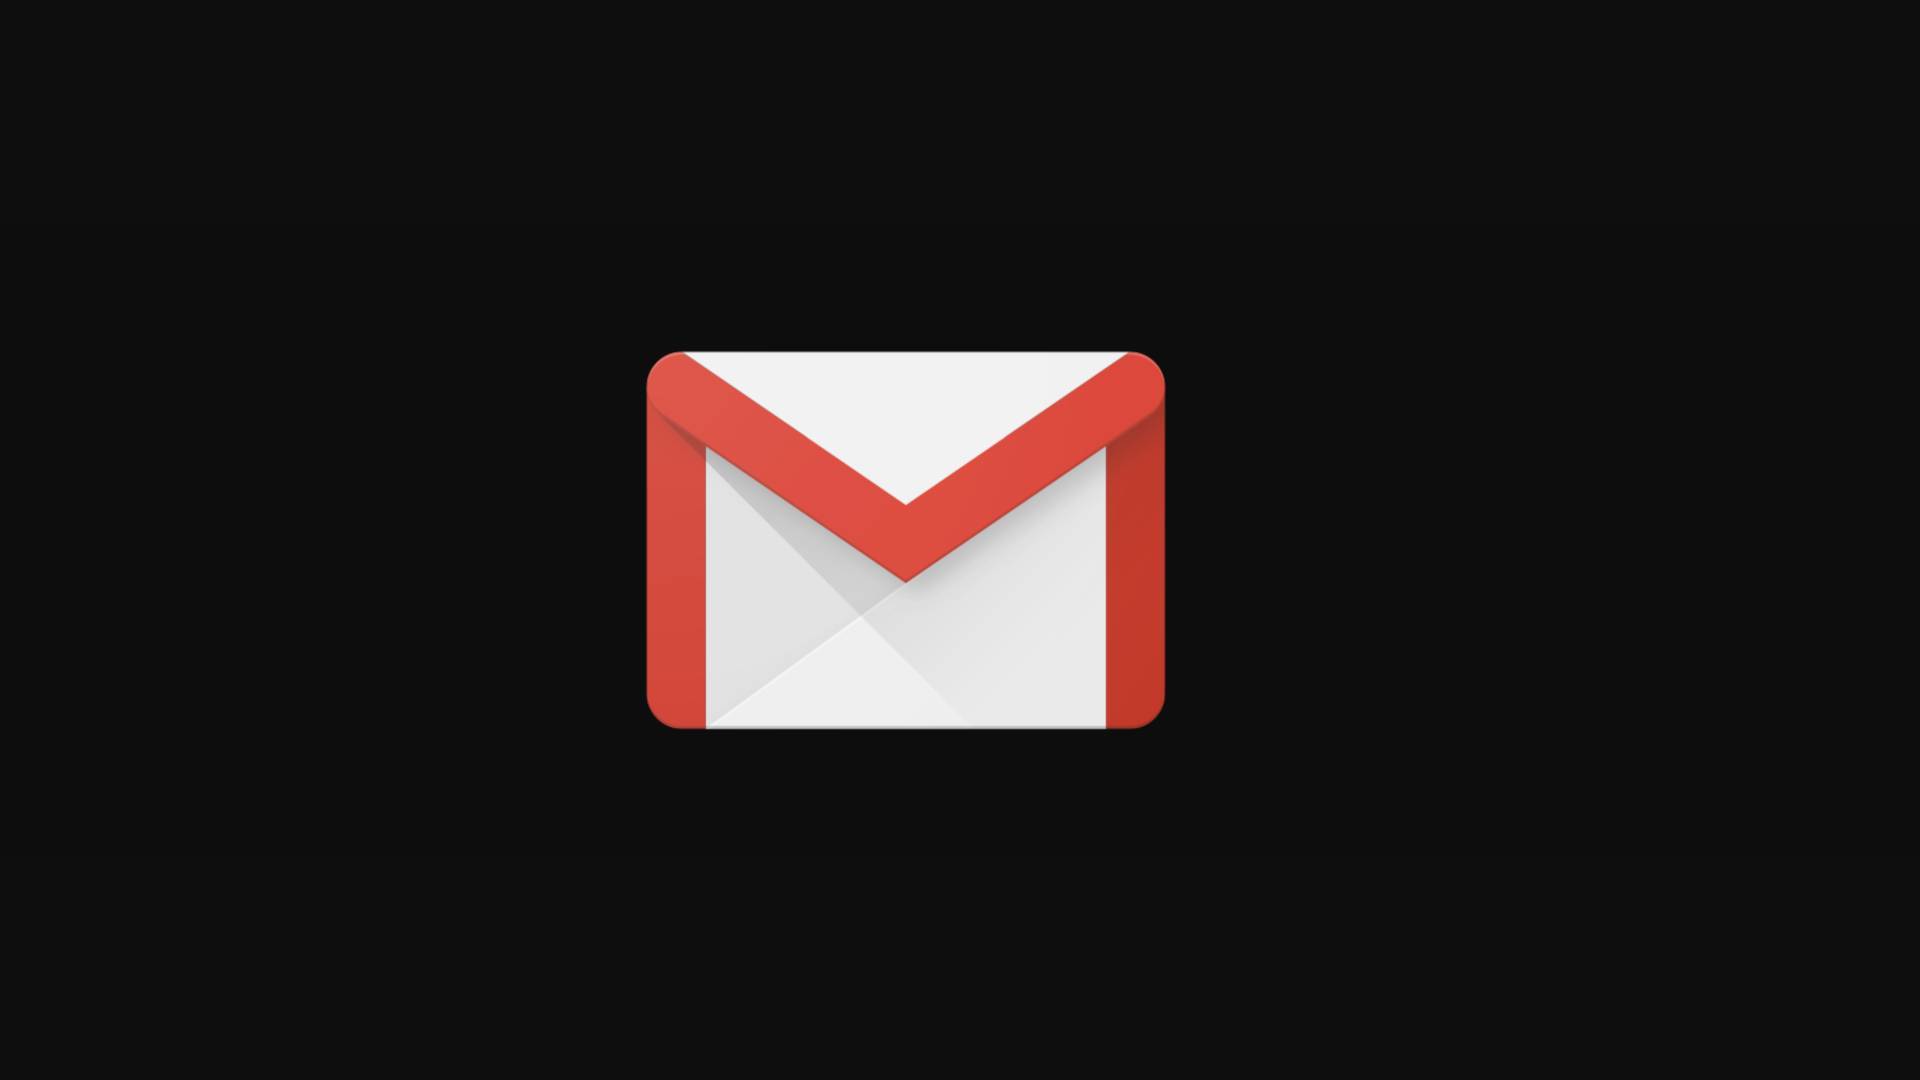 F gmail com. Gmail логотип. Картинка gmail почты. Гугл почта фото.